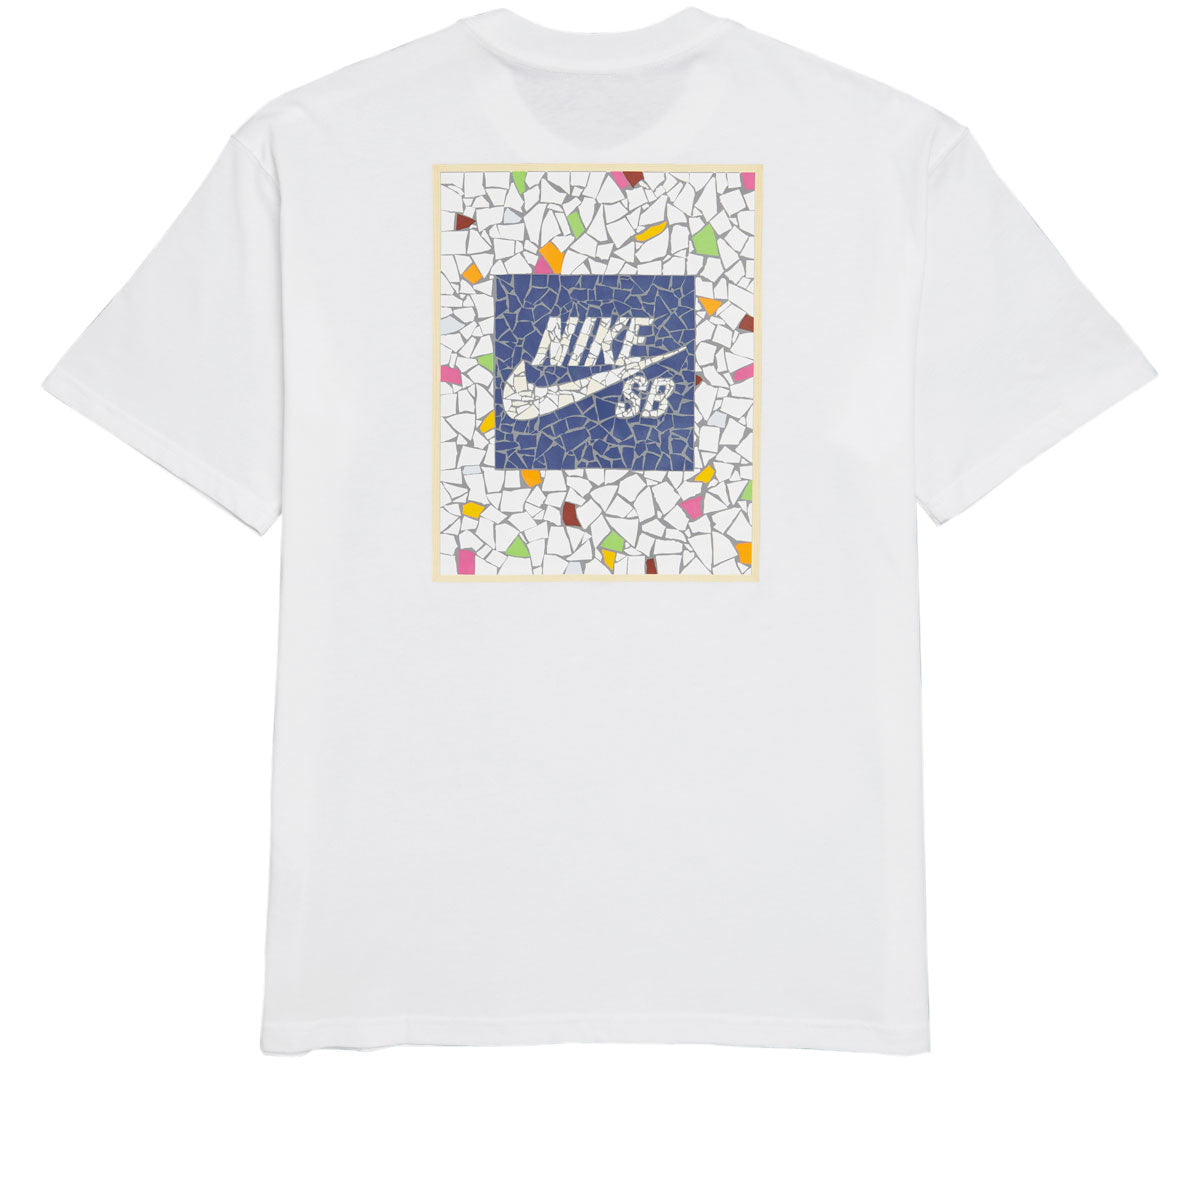 Nike SB Mosaic T-Shirt - White image 1